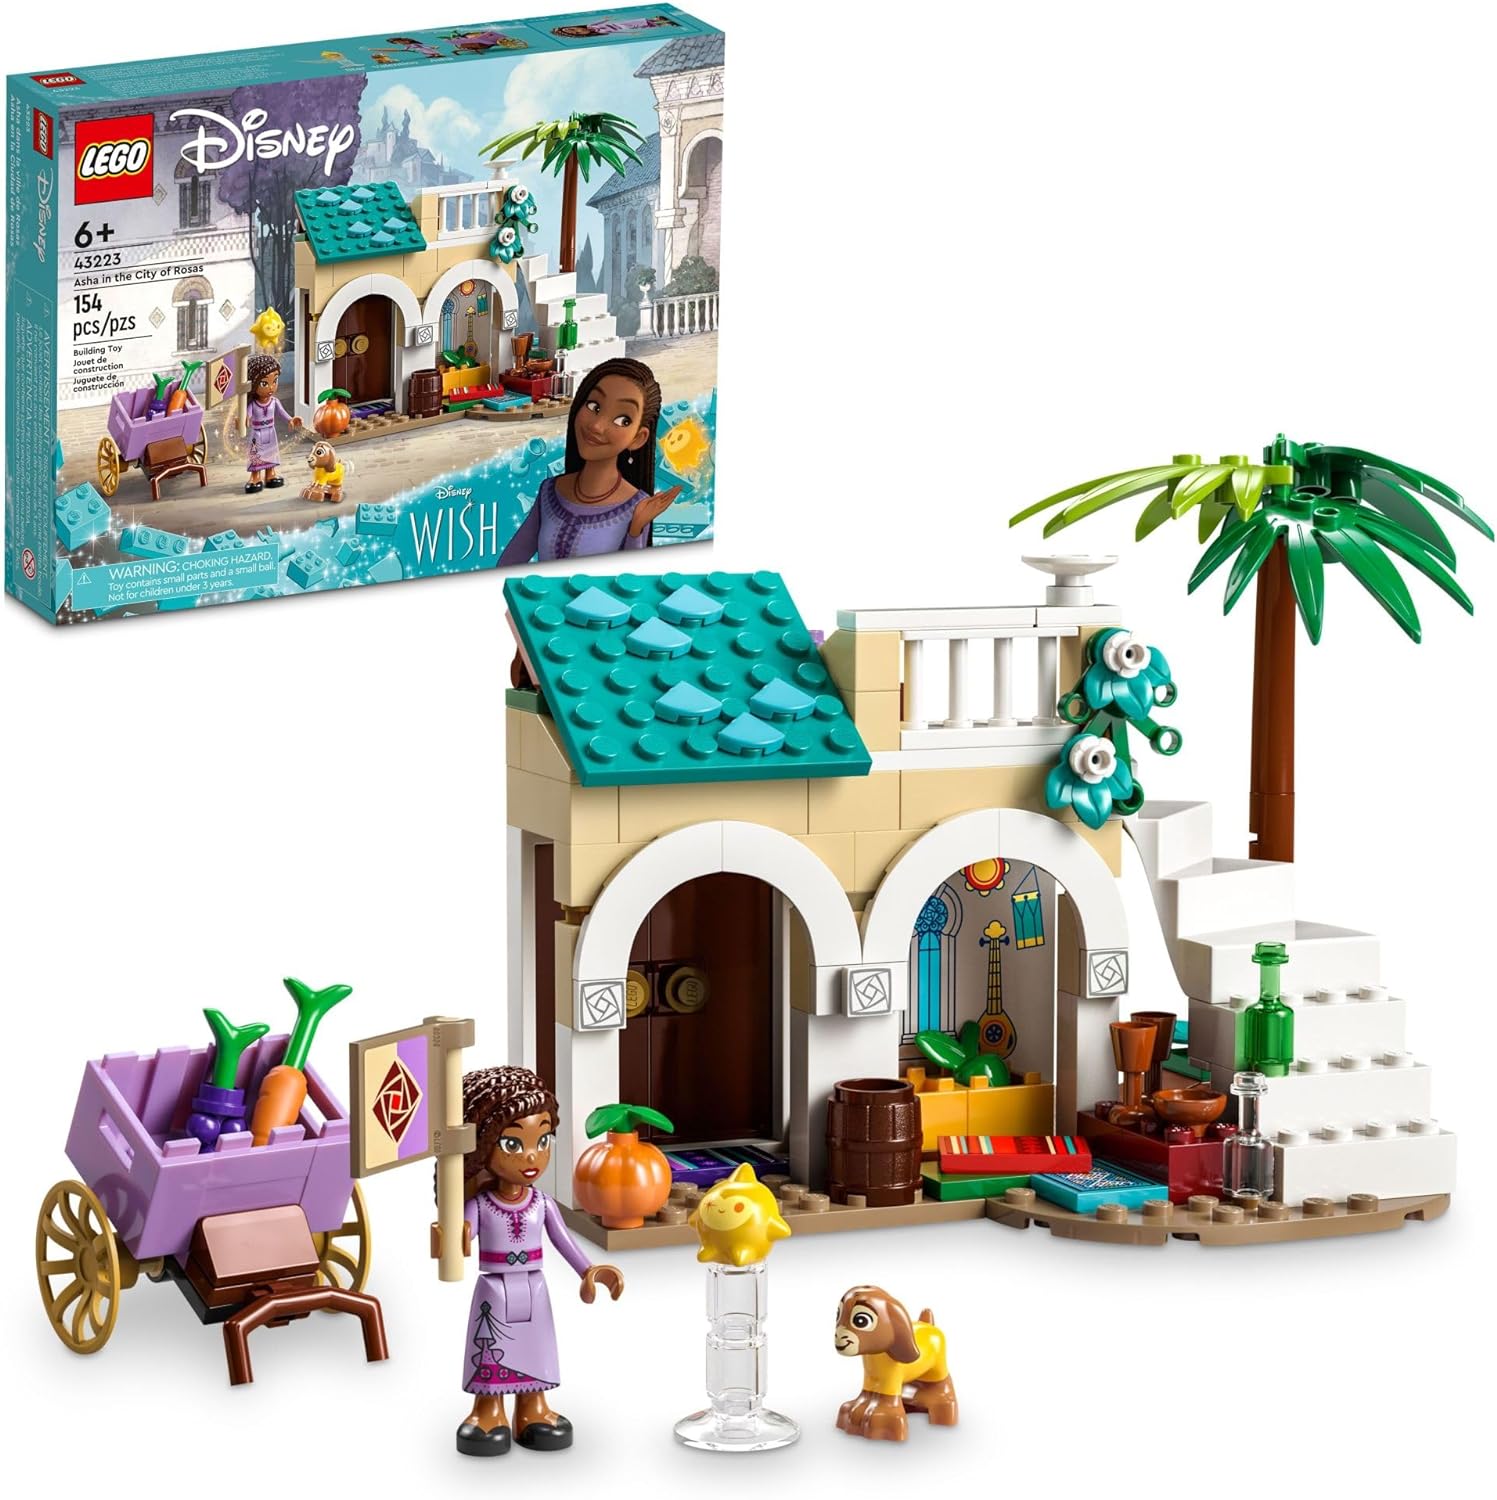 LEGO 43223 Disney Wish - Asha in the City of Rosas